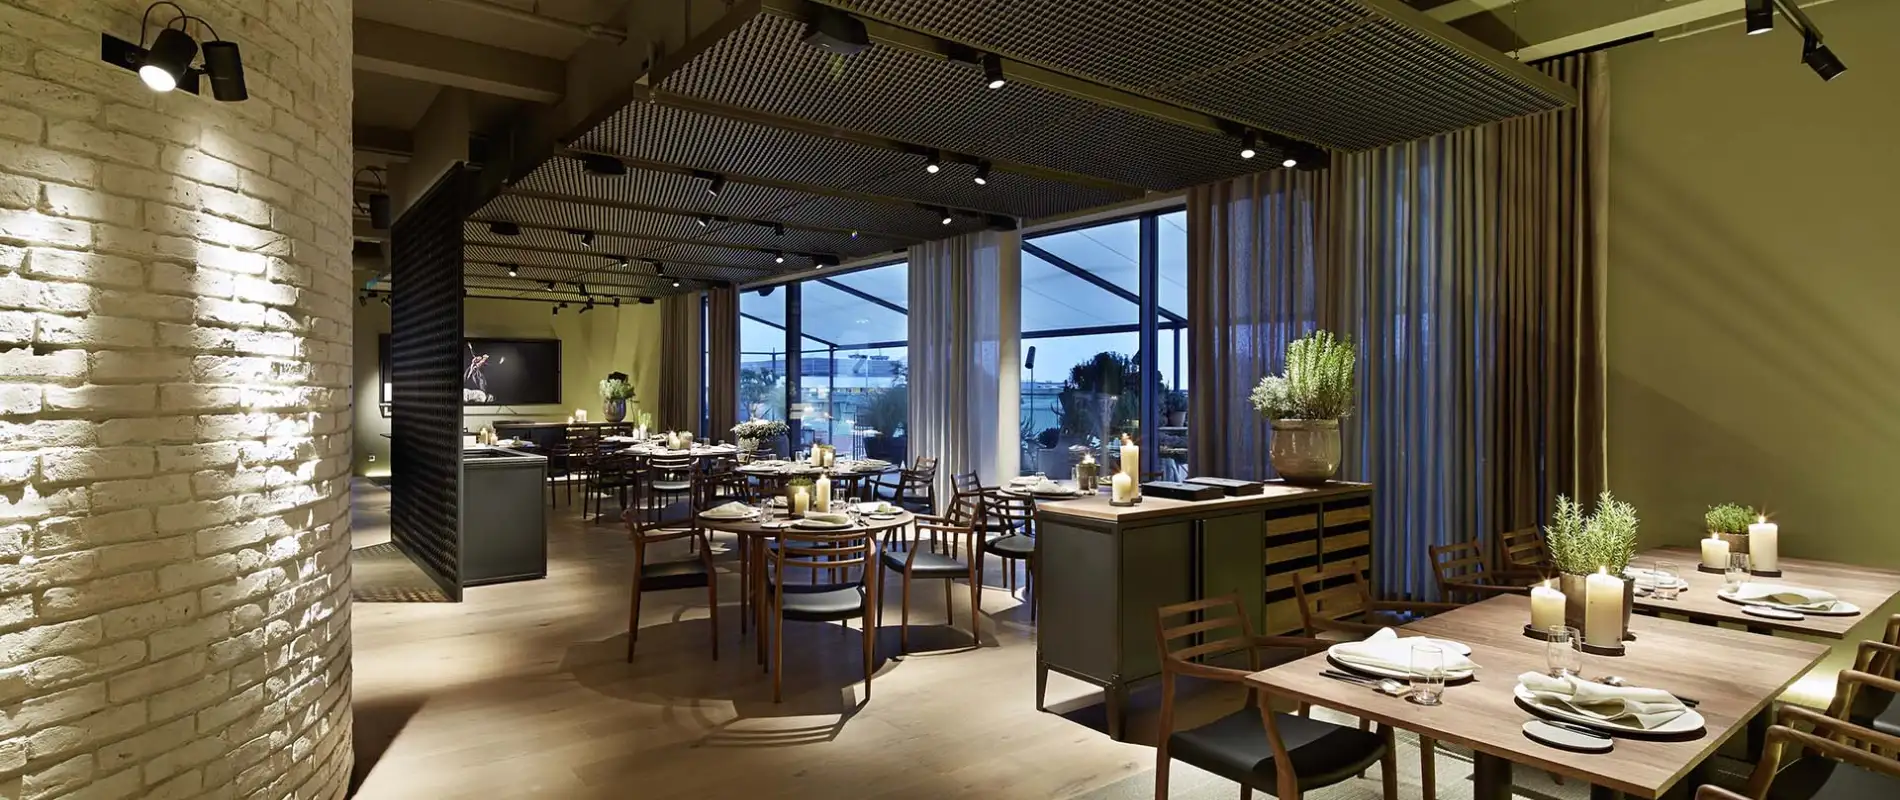 gourmet restaurant - new construction - Restaurant Opus V Mannheim - overview inside - dining area - wooden interior - dining tables